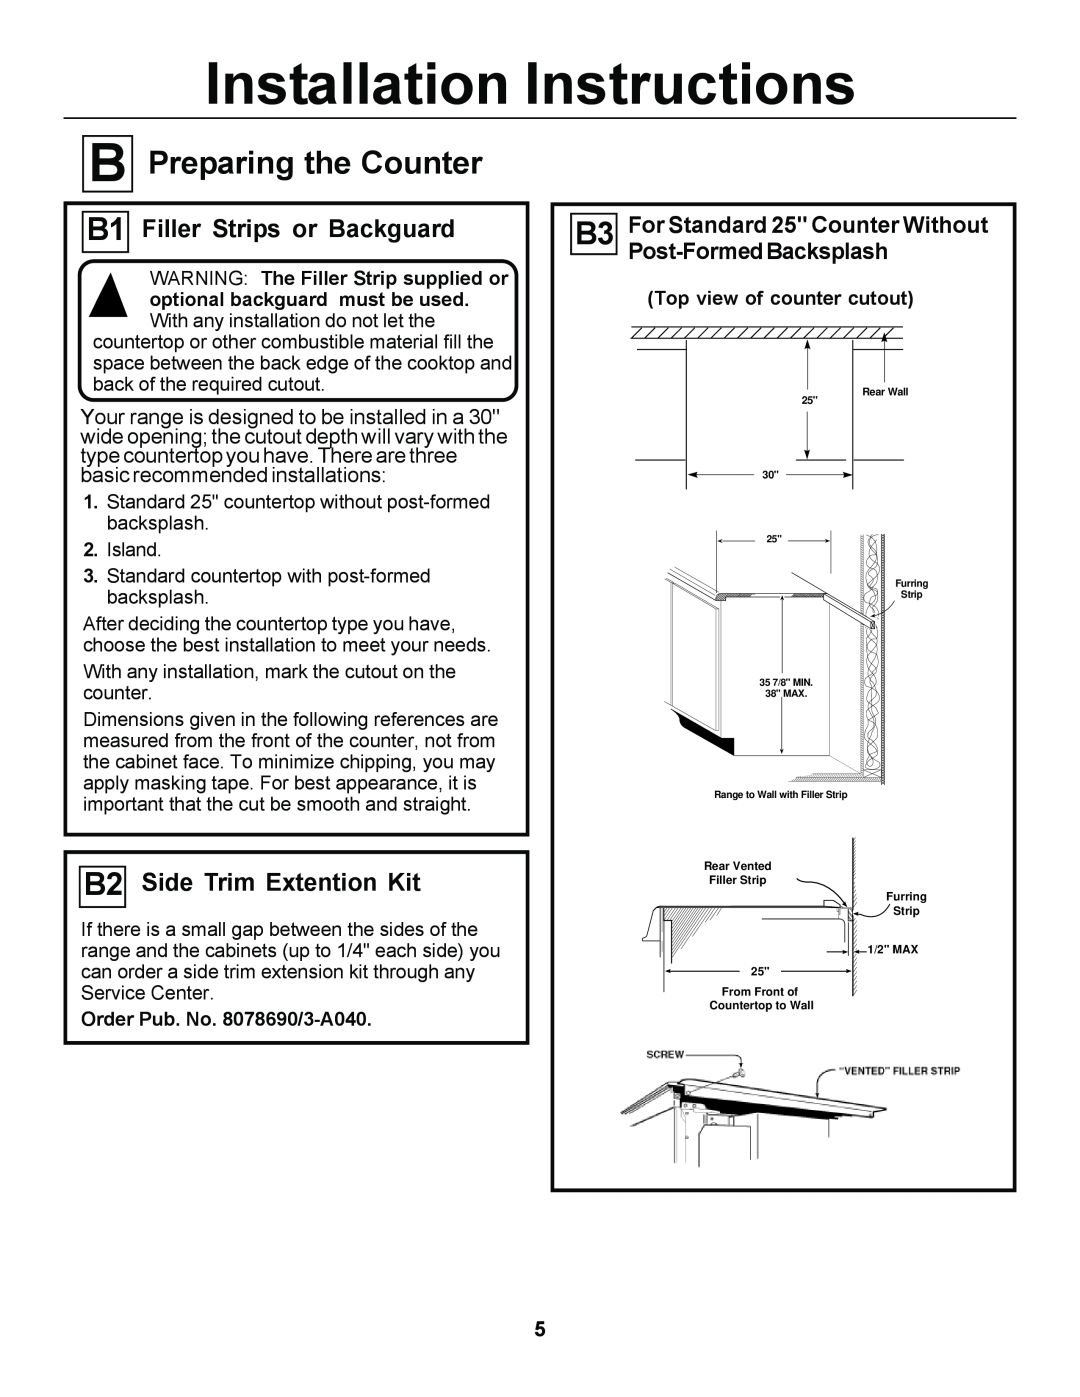 GE JGSP23 B Preparing the Counter, B1 Filler Strips or Backguard, B2 Side Trim Extention Kit, Installation Instructions 